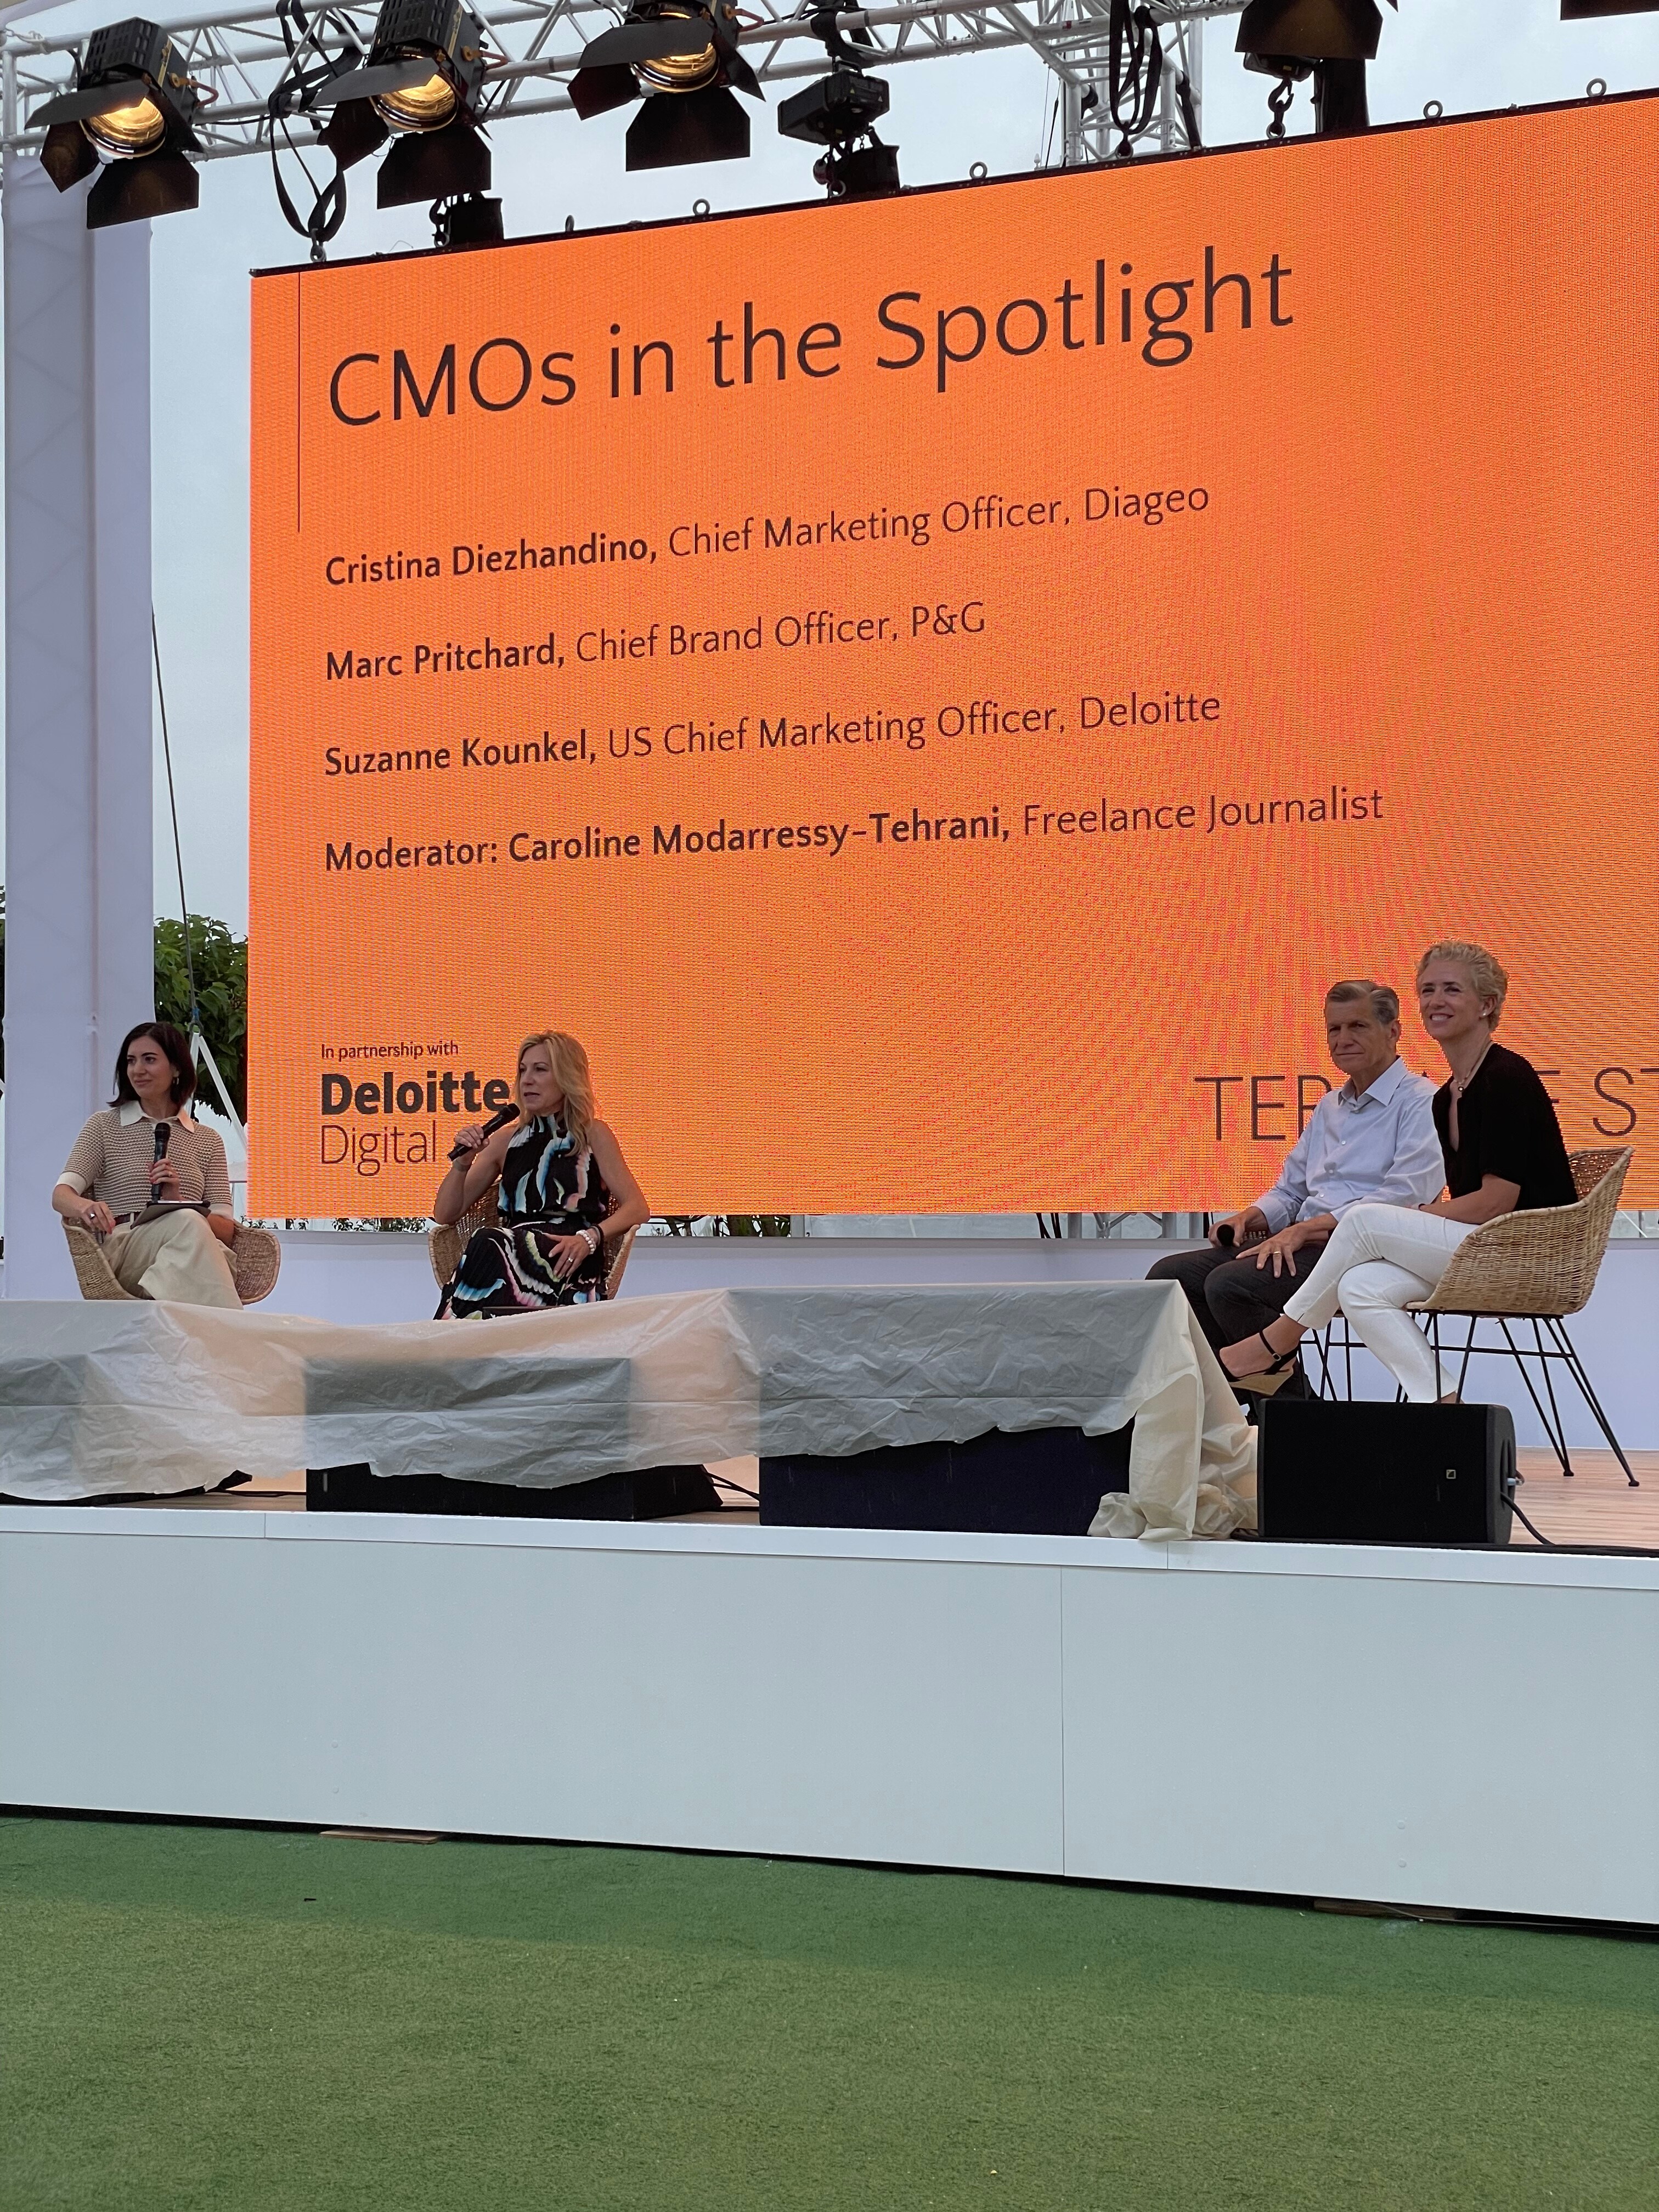 CMOs in the Spotlight image